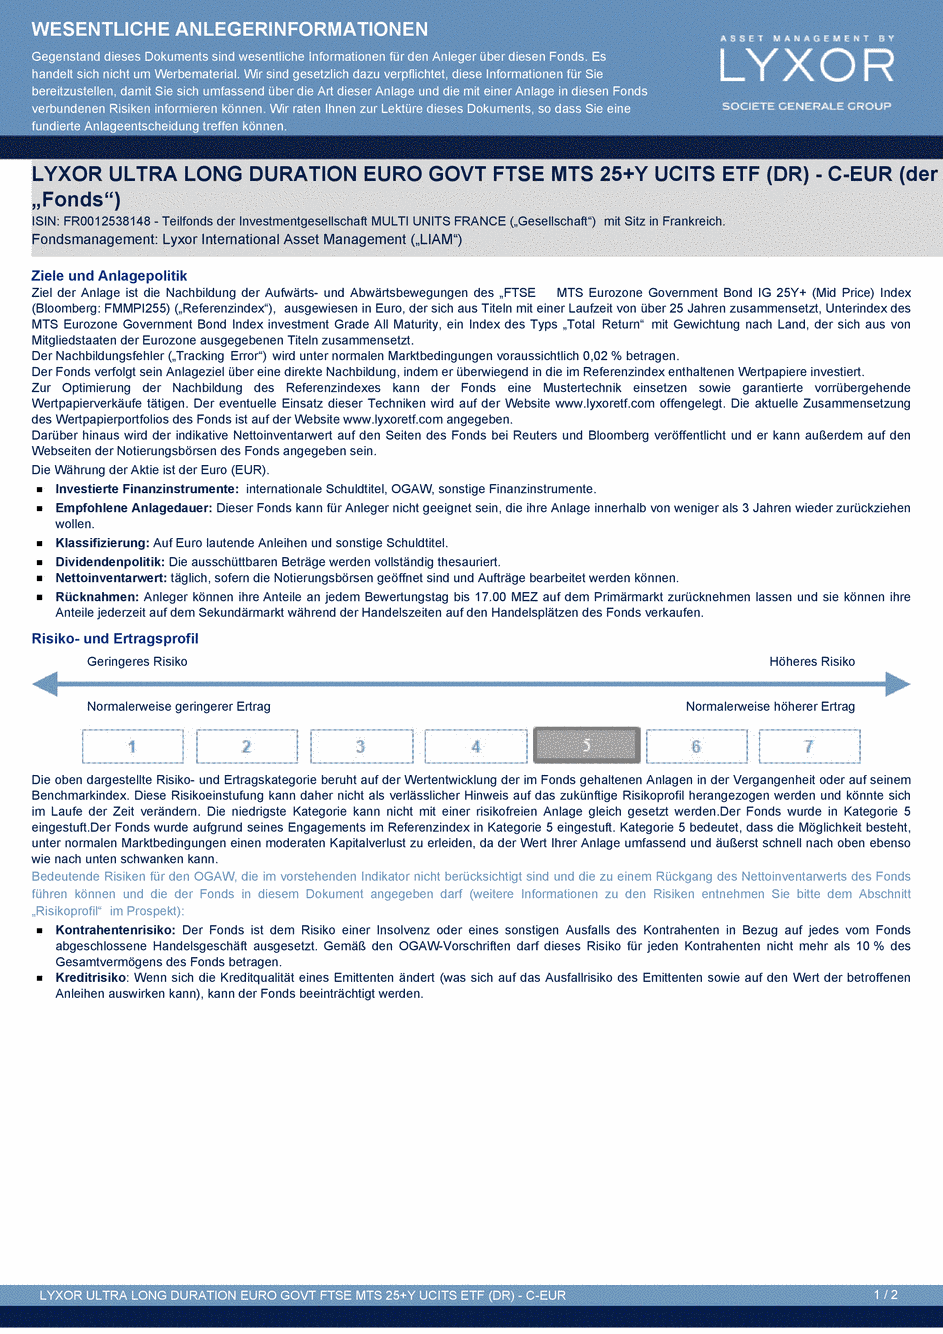 DICI LYXOR ULTRA LONG DURATION EURO GOVT FTSE MTS 25+Y (DR) UCITS ETF - C-EUR - 30/06/2016 - Allemand